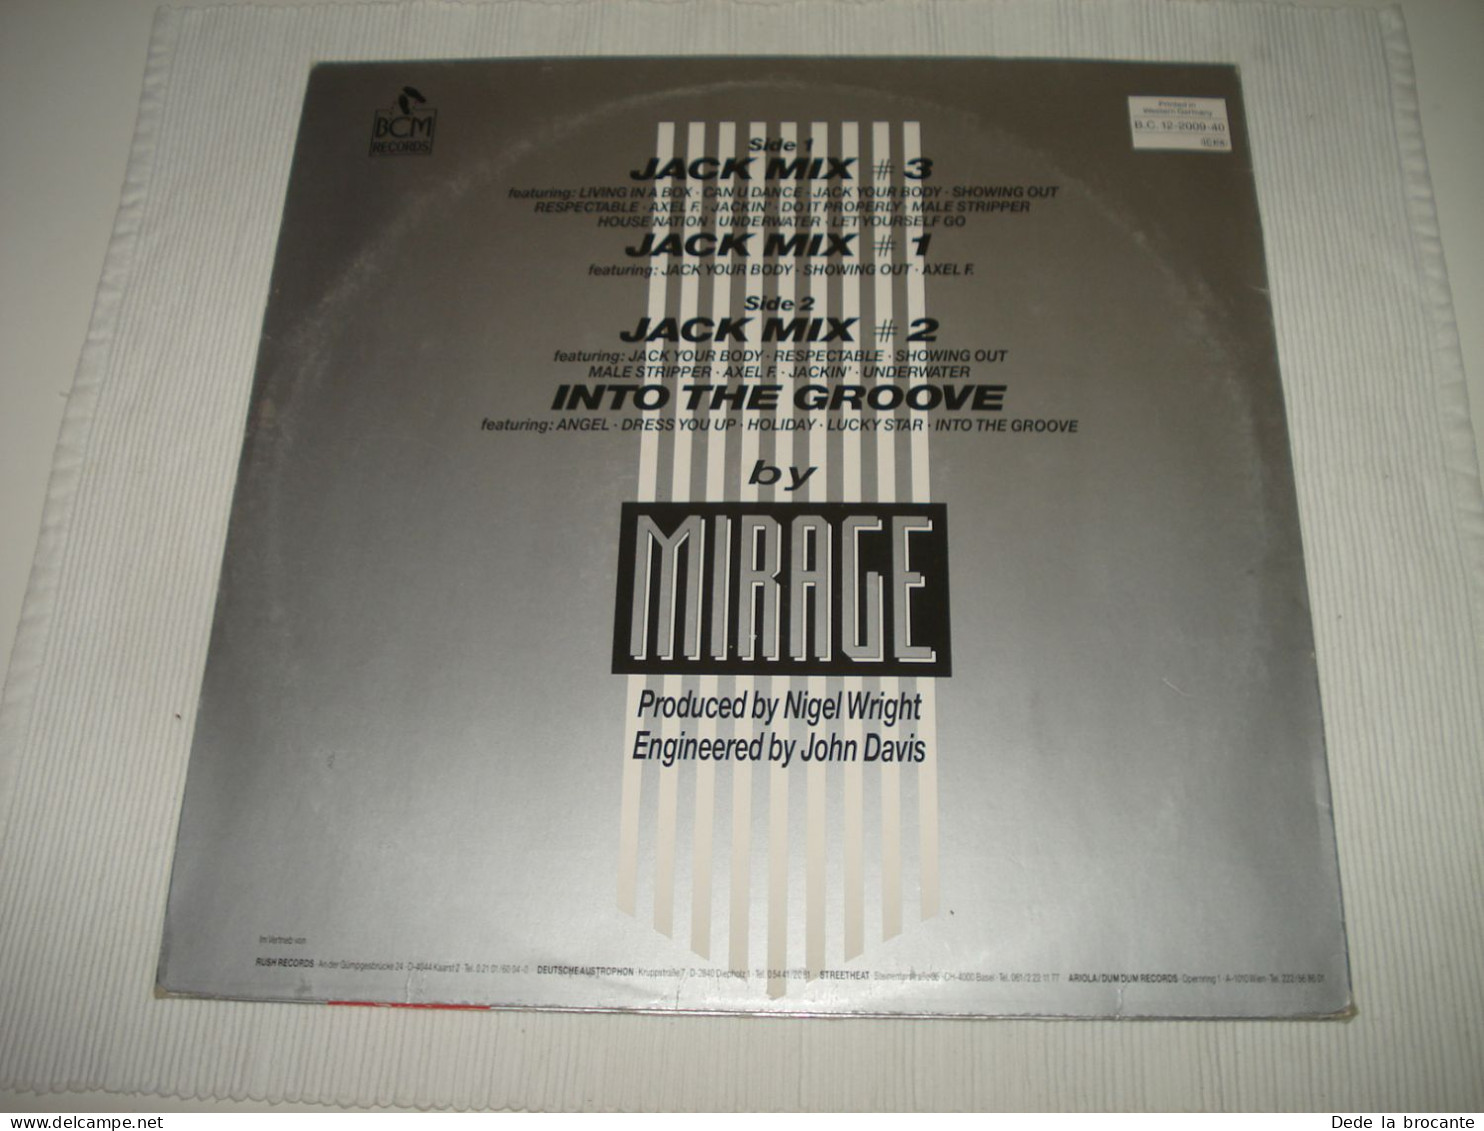 B8 / Mirage  – The Jack Mixes  33 RPM - B.C. 12-2009-40 - Ger -  1987 -  EX/EX - Speciale Formaten